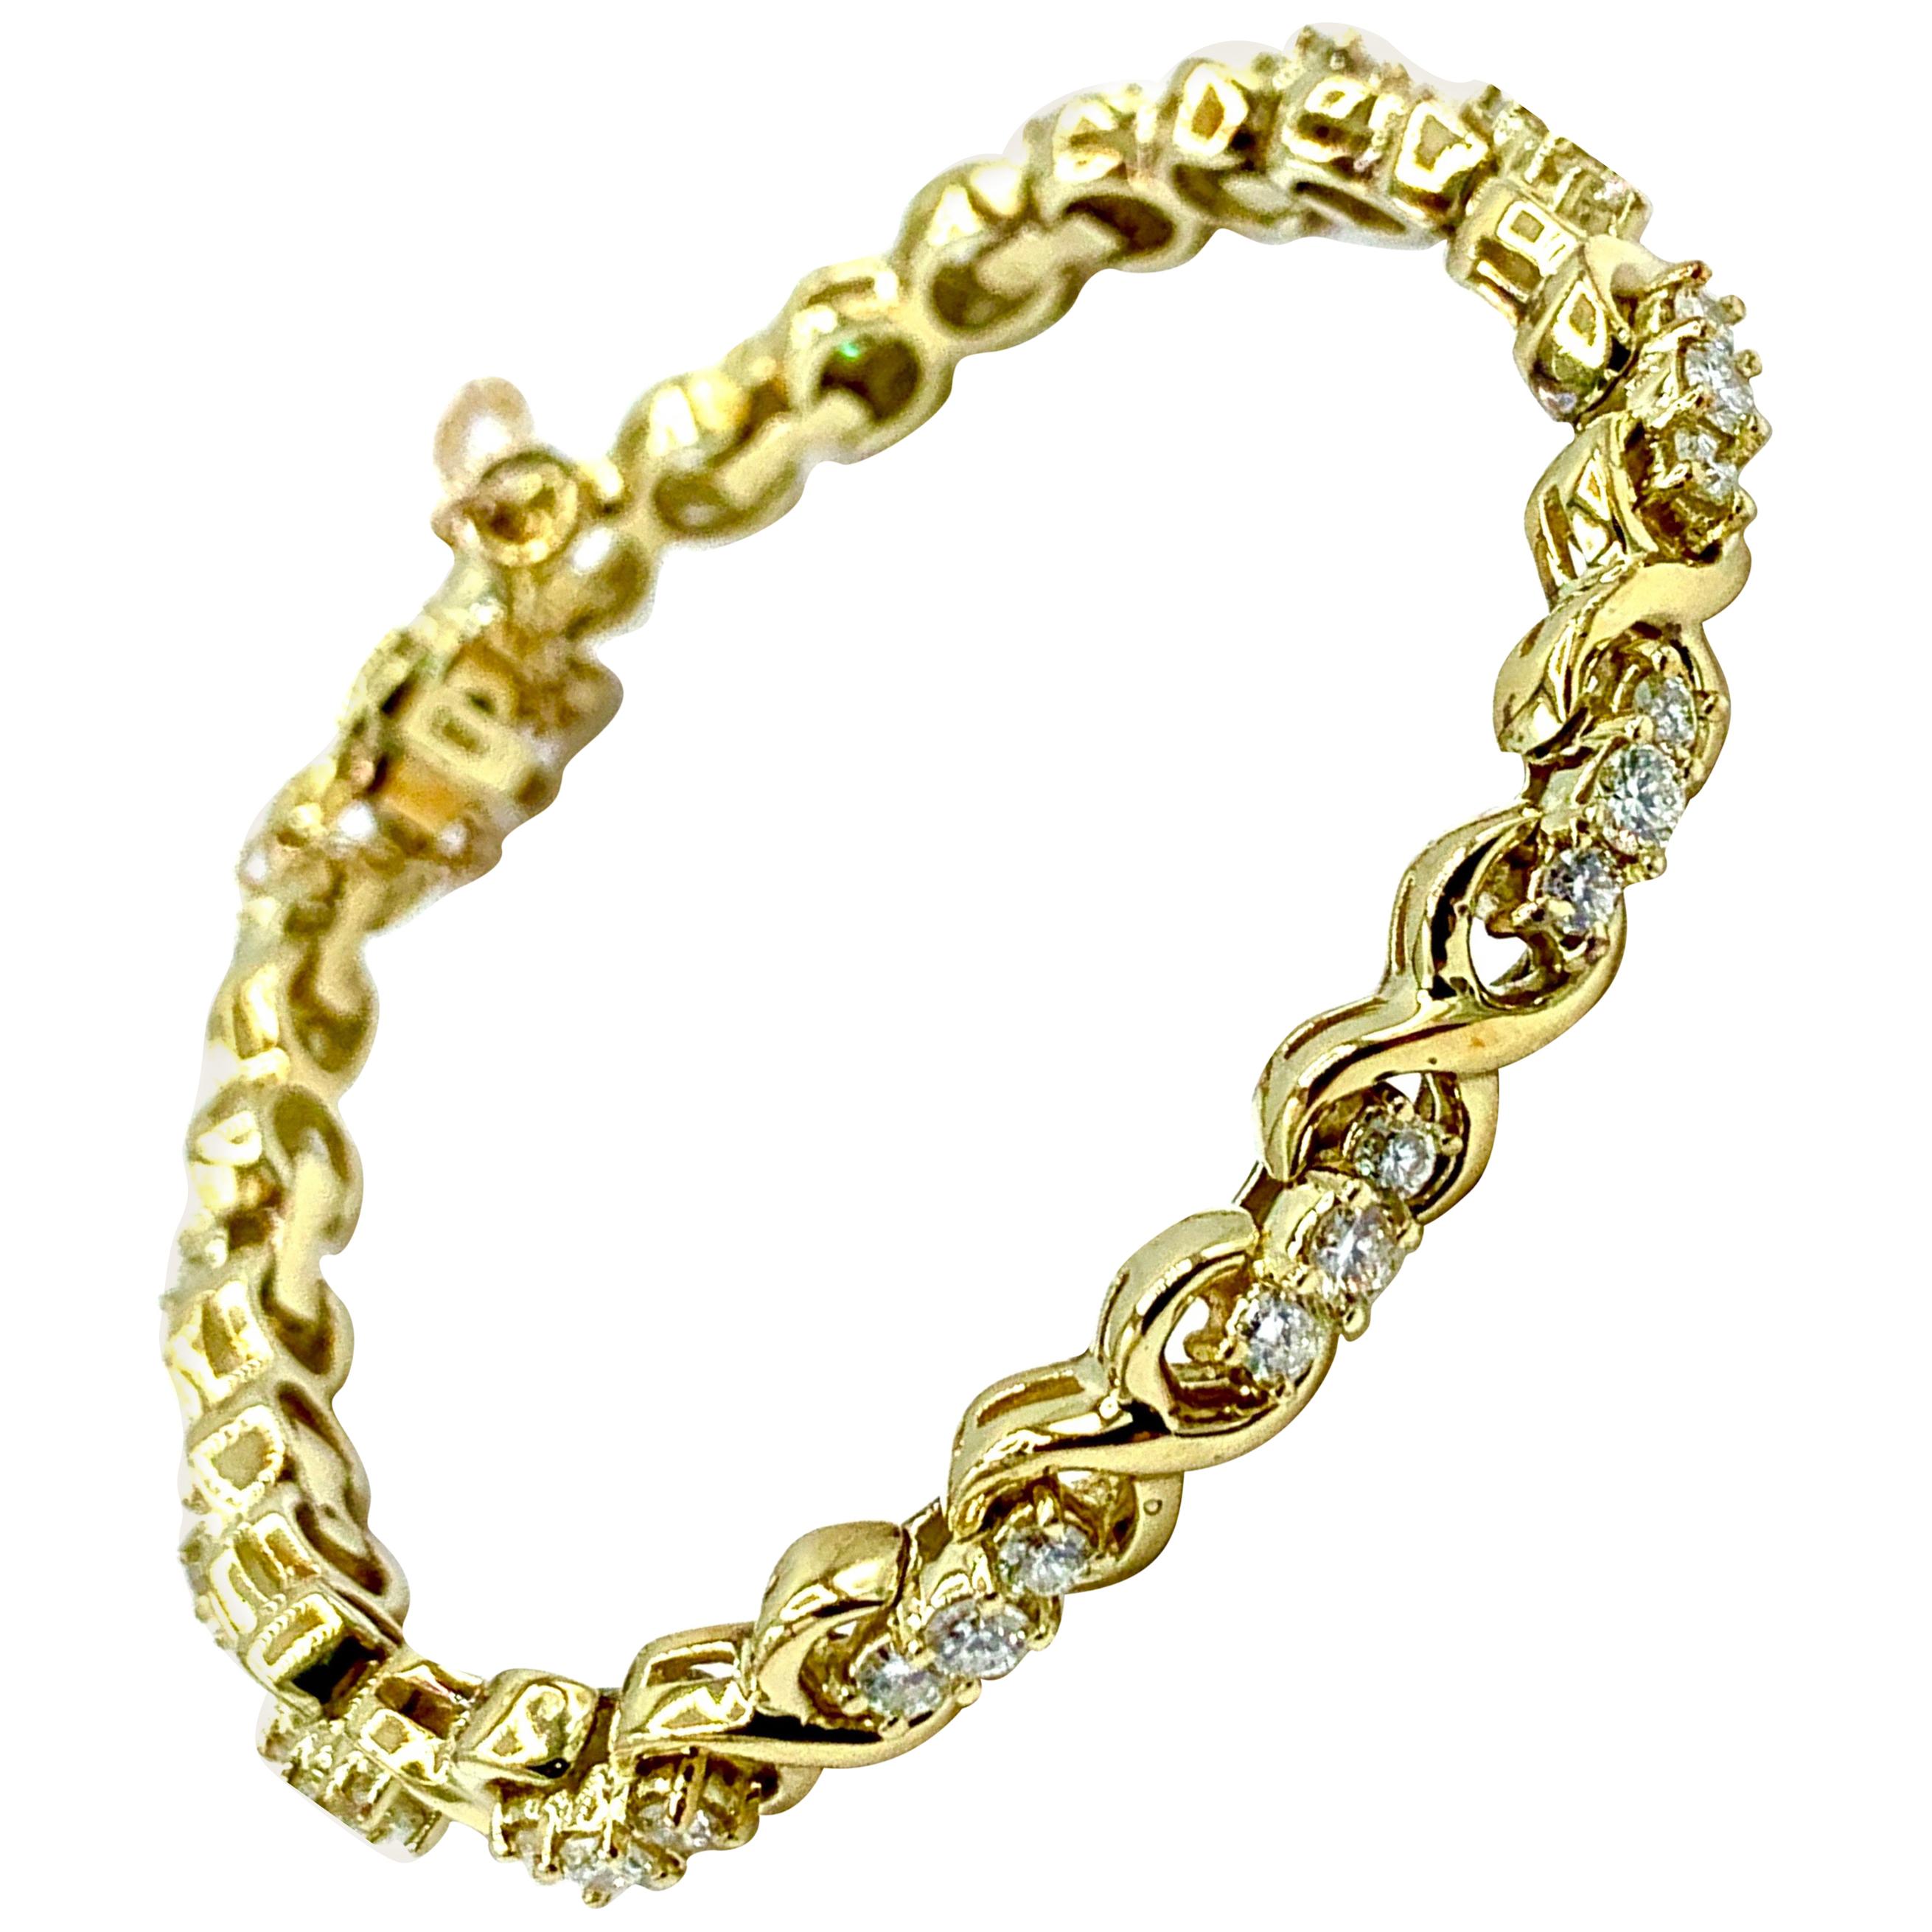 1.44 Carat Round Brilliant Diamond and 18 Karat Yellow Gold Bracelet